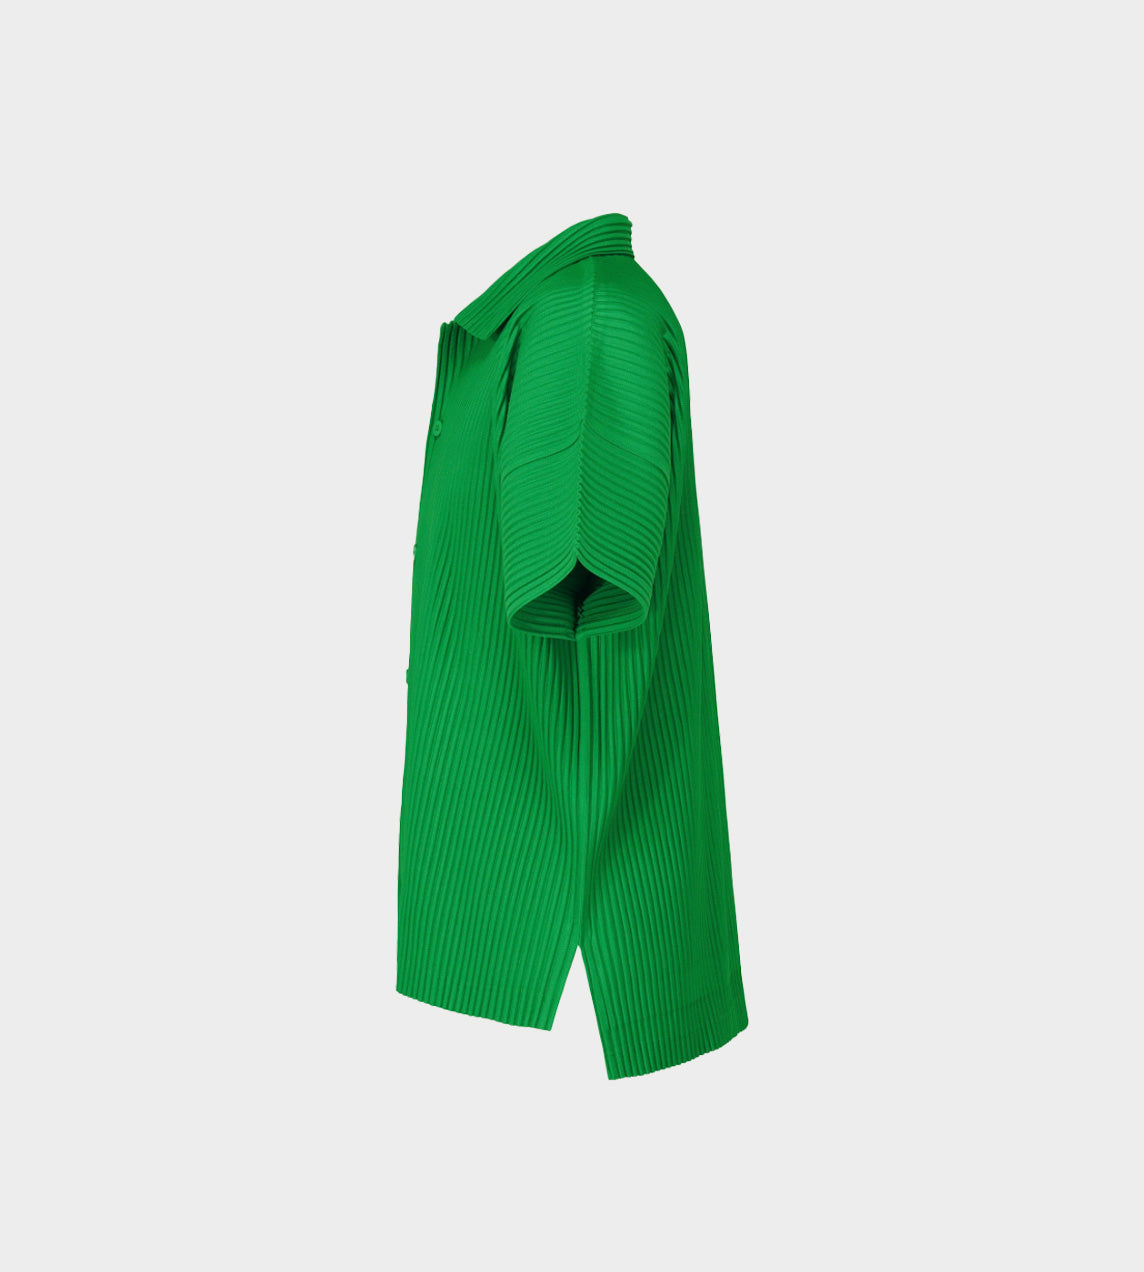 Homme Plisse Issey Miyake - Short Sleeve Pleated Shirt Emerald Green